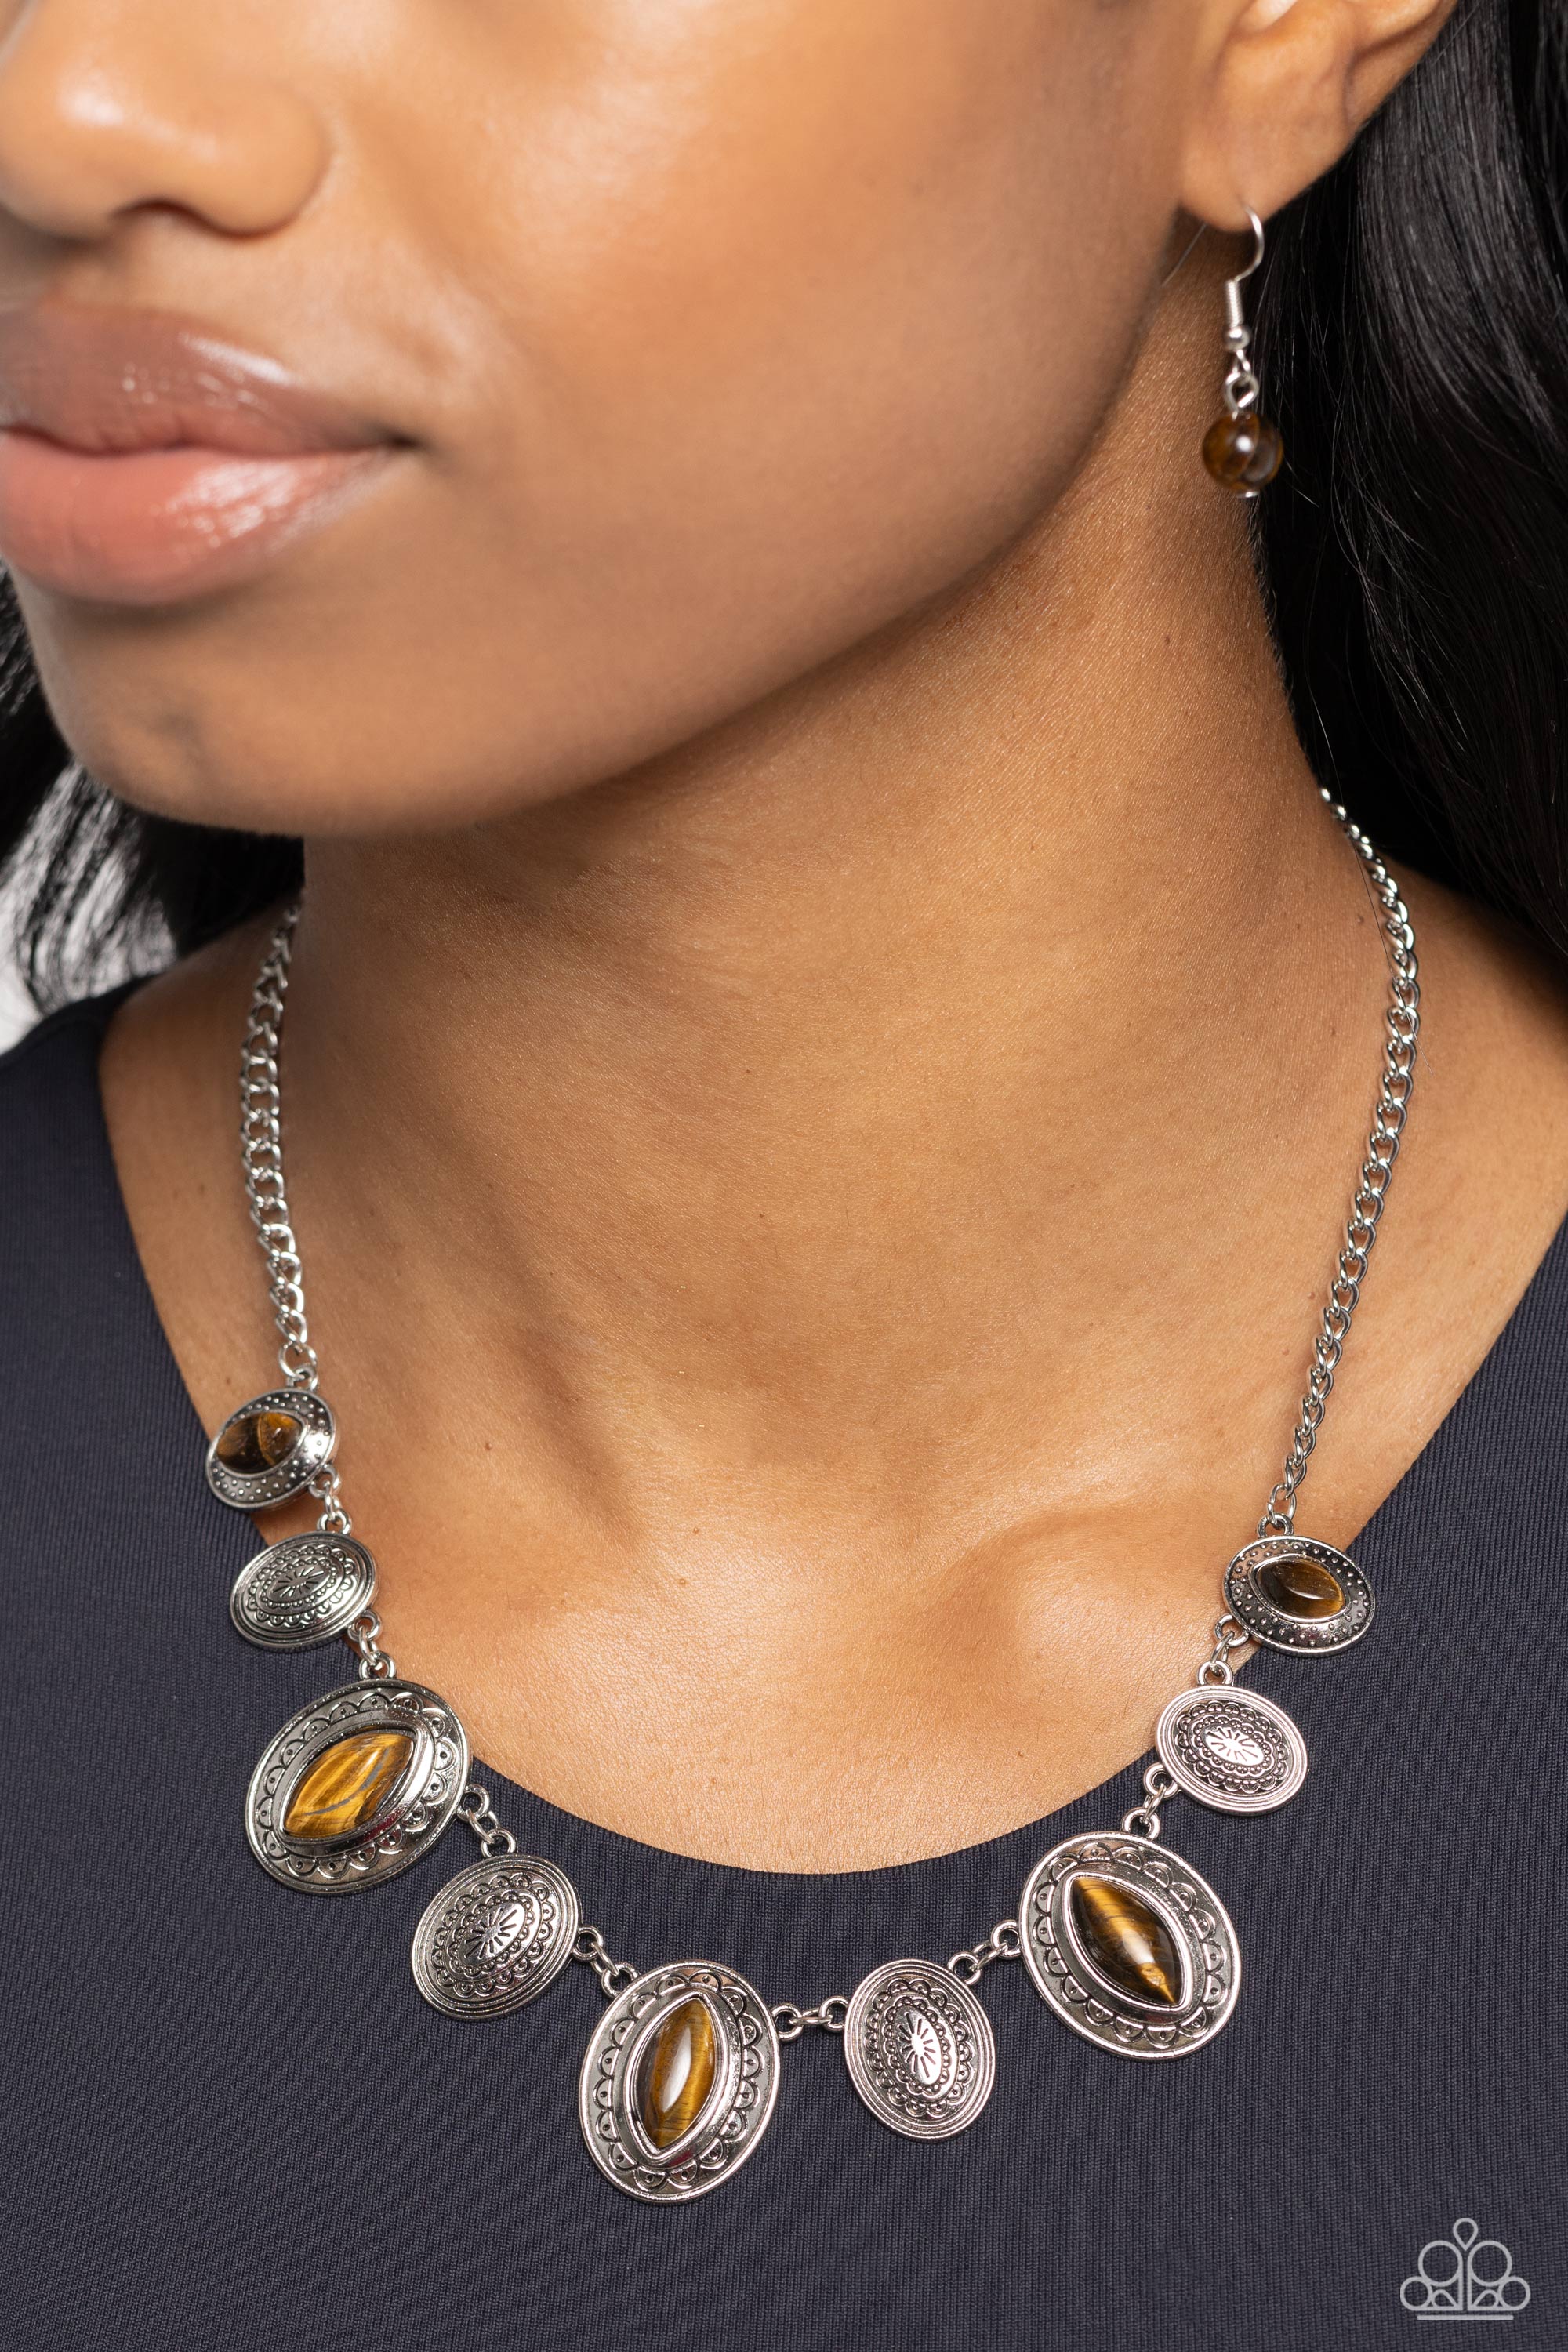 Textured Trailblazer Brown Tiger's Eye Stone Necklace - Paparazzi Accessories- lightbox - CarasShop.com - $5 Jewelry by Cara Jewels